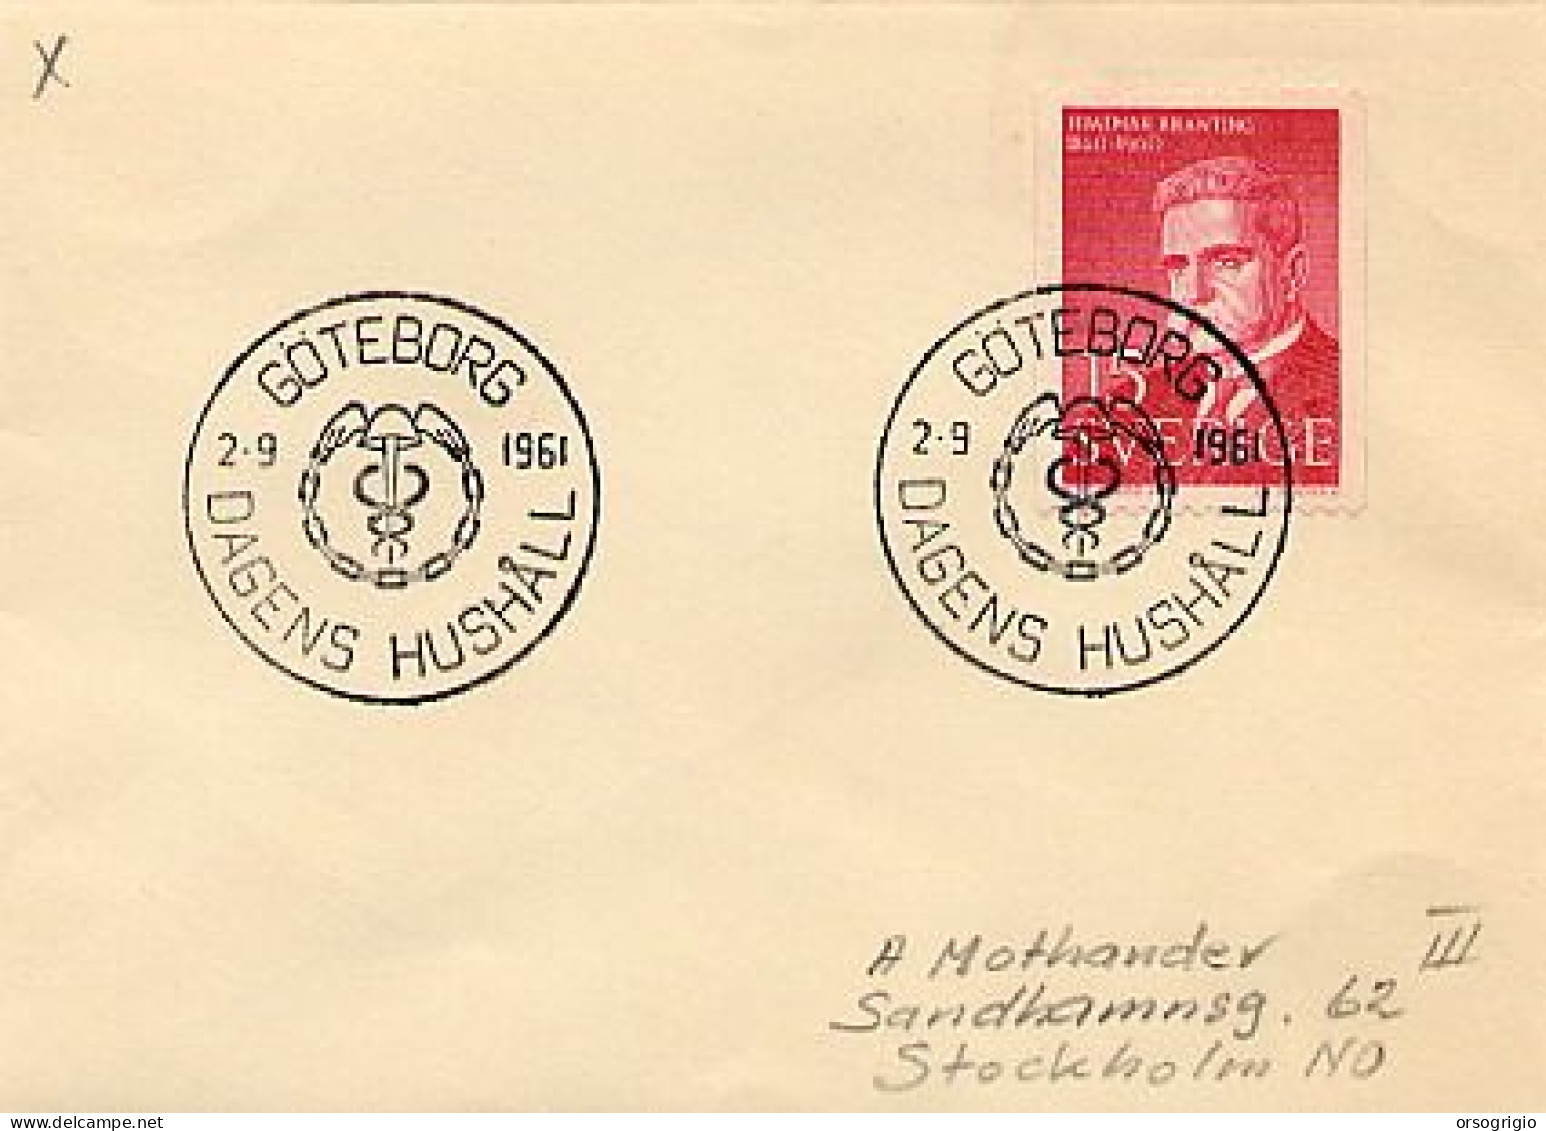 SVERIGE - GOTEBORG  - GIORNATA DELLA FAMIGLIA 1961 - Covers & Documents